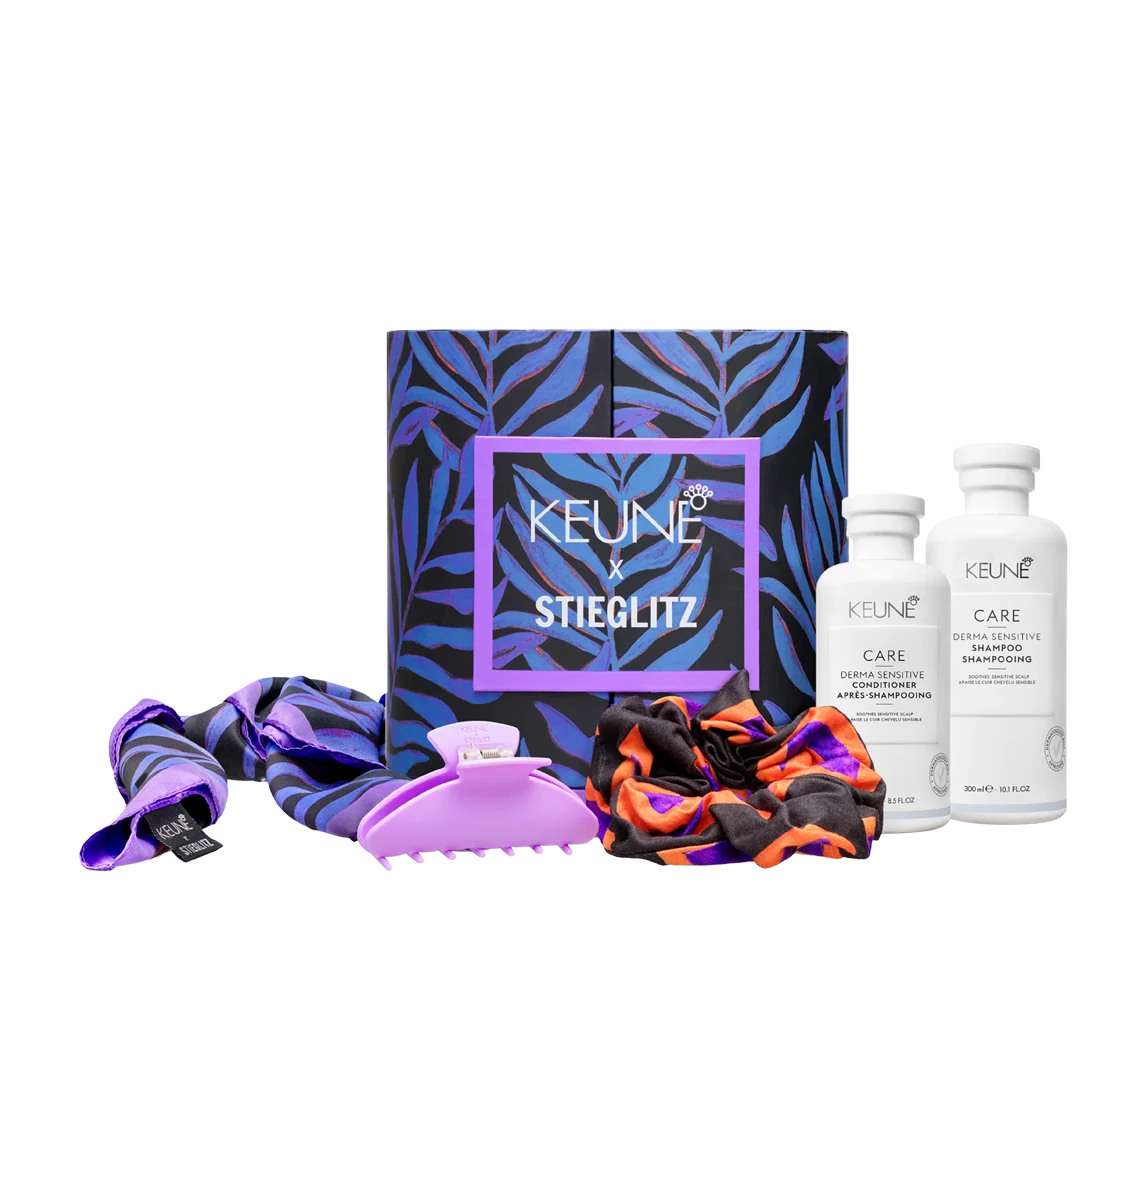 Image product gallery - Keune Stieglitz Giftbox - Derma Sensitive